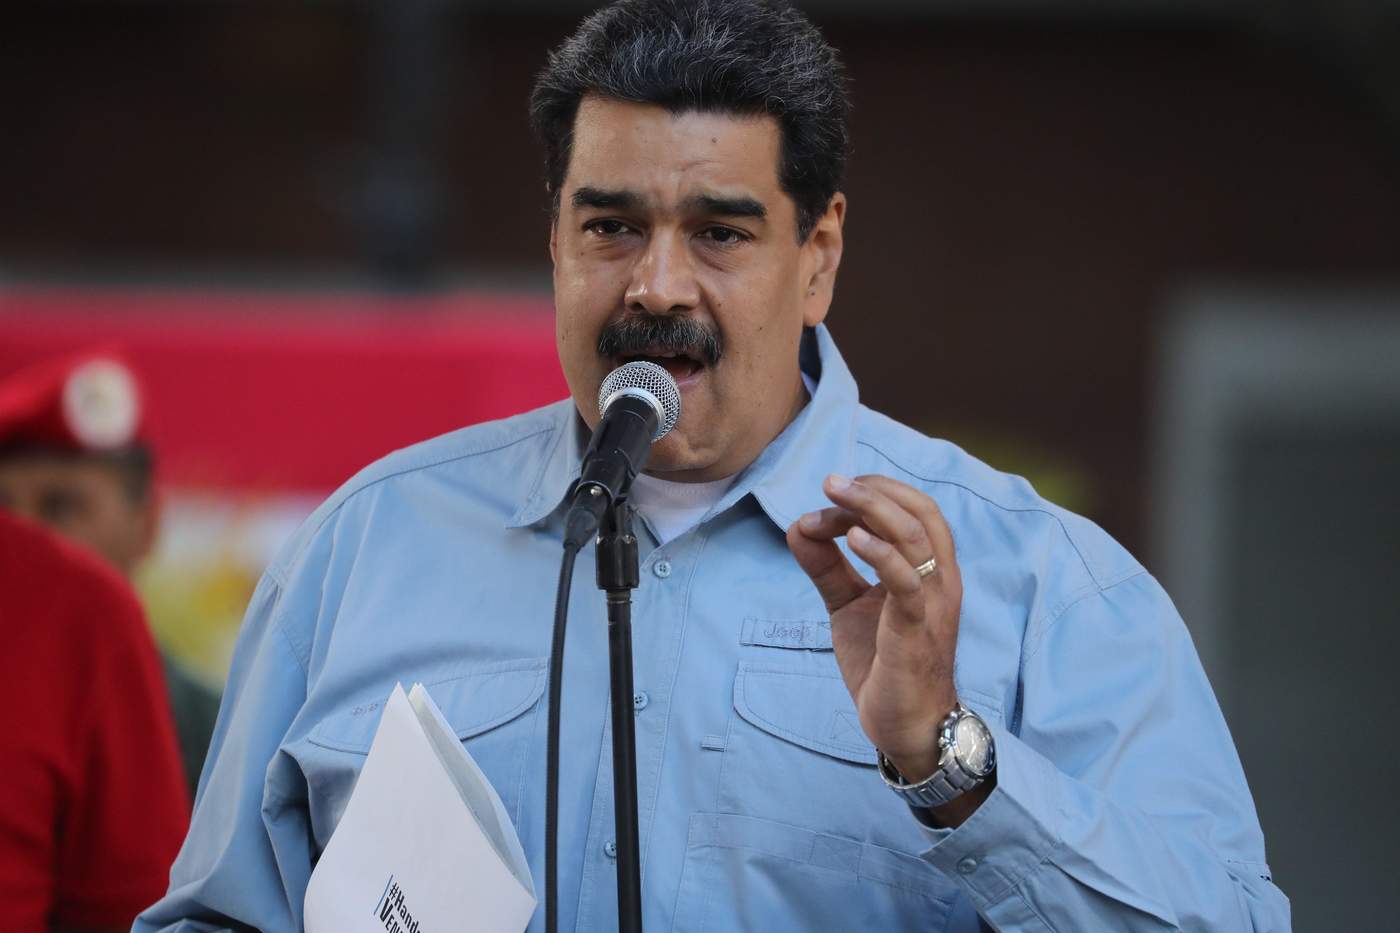 EUA revoca visados a 49 'aliados' de Maduro y sus familias